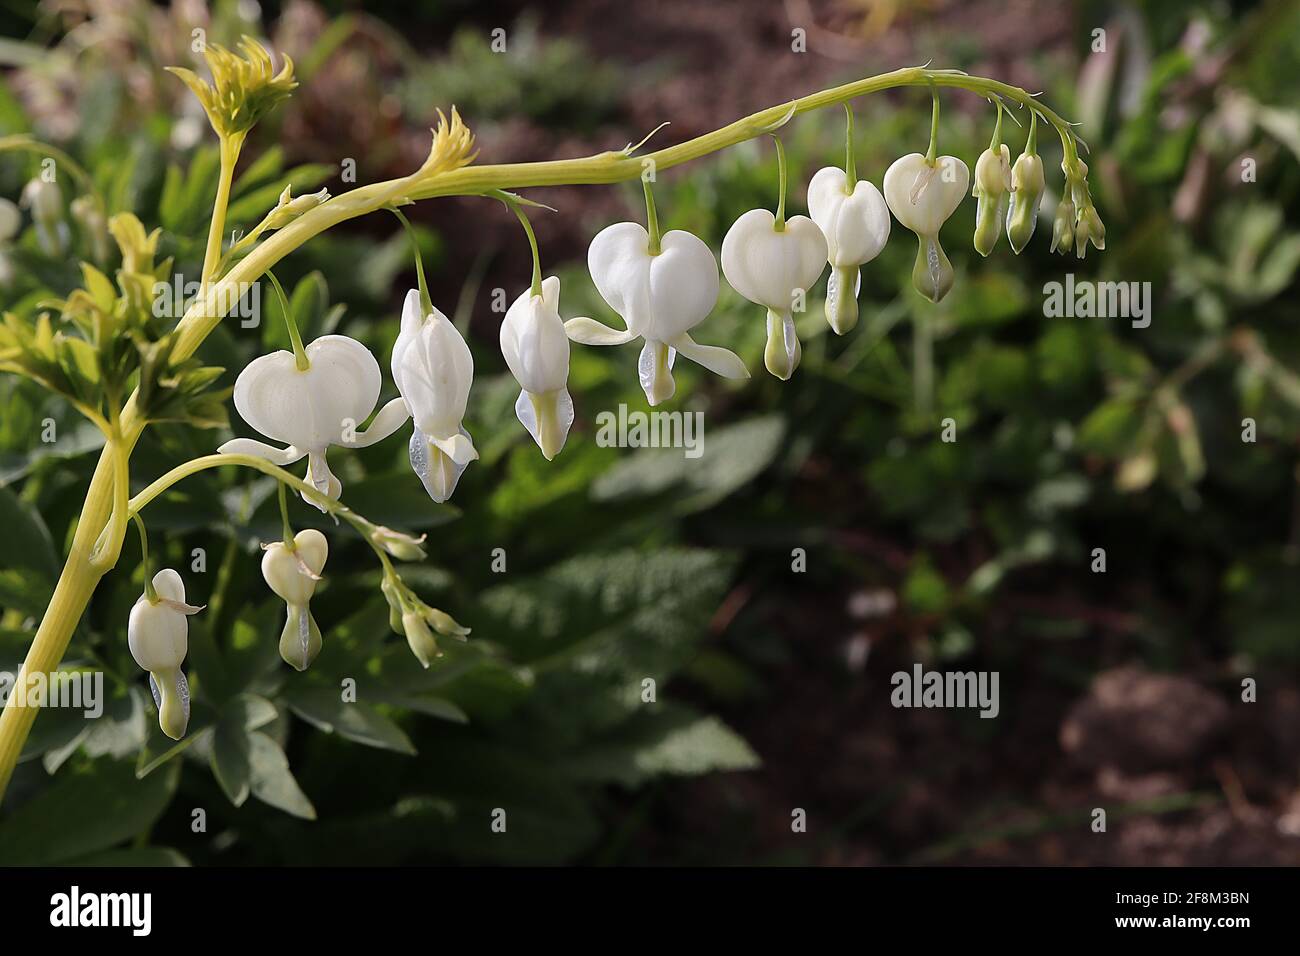 Lamprocapnos spectabilis ‘Alba’ Dicentra spectabilis Alba – weiße herzförmige Blüten mit farnem Laub, April, England, Großbritannien Stockfoto